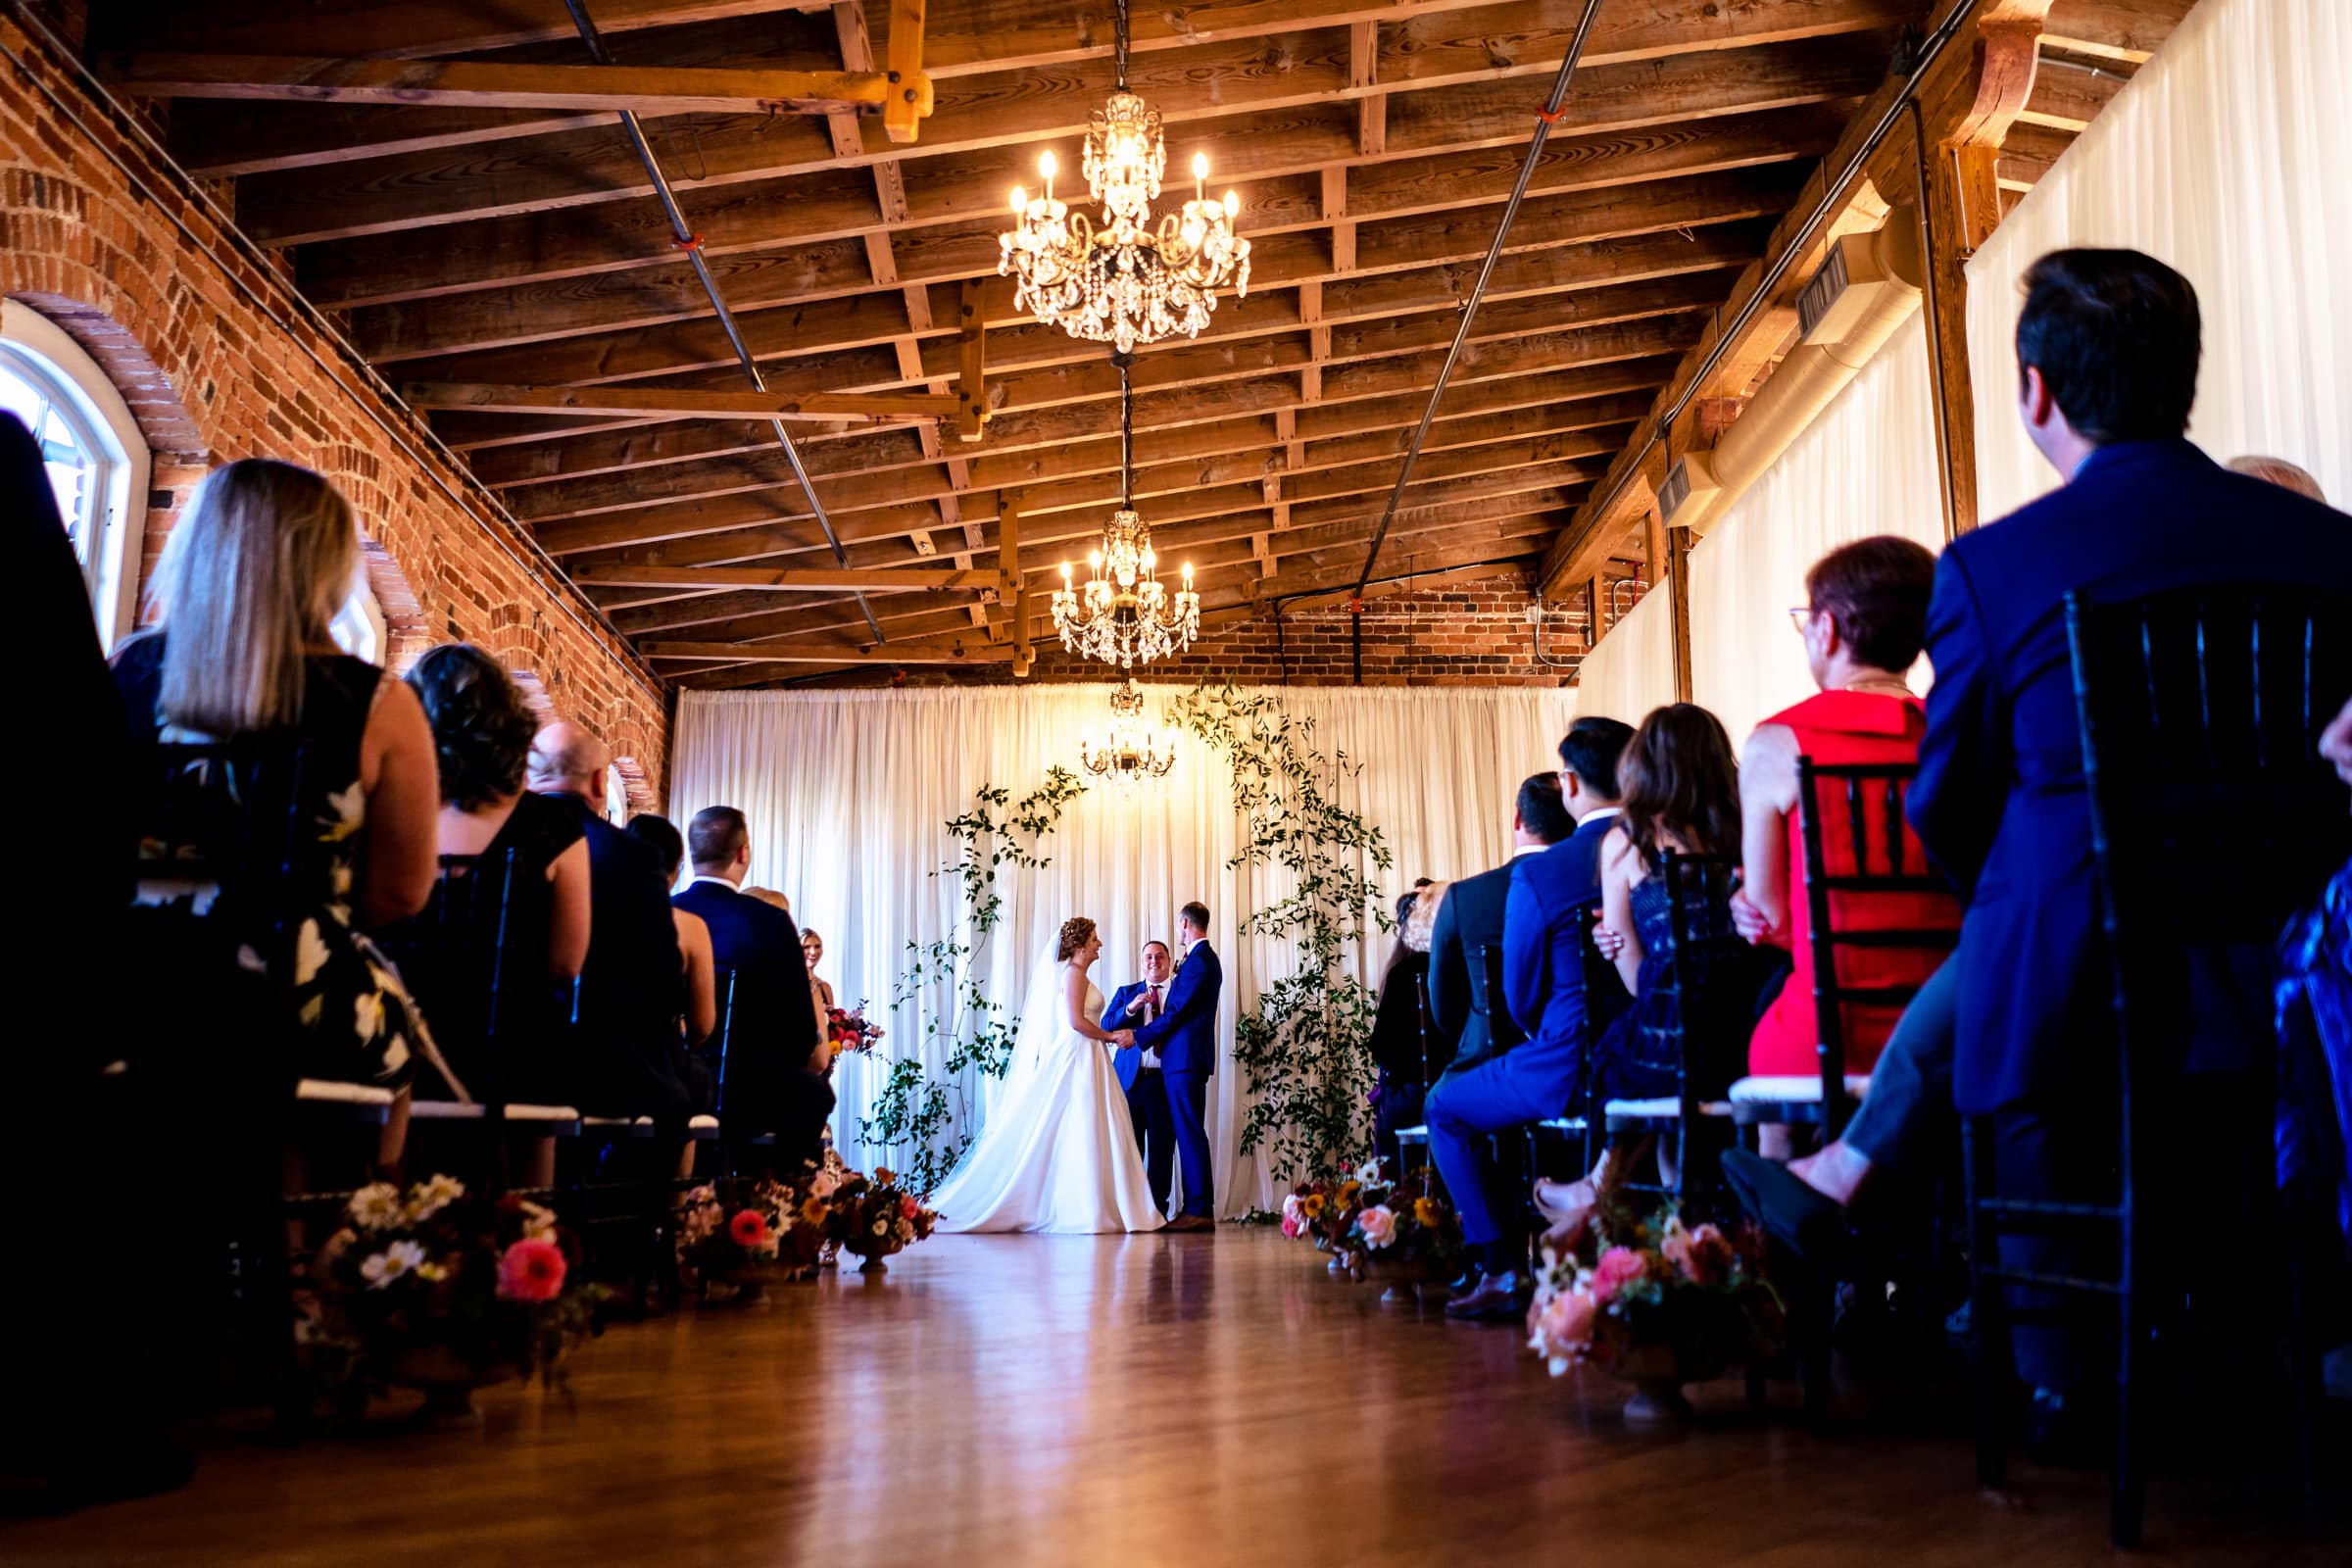 Melrose Knitting Mill wedding ceremony | photos by Kivus & Camera